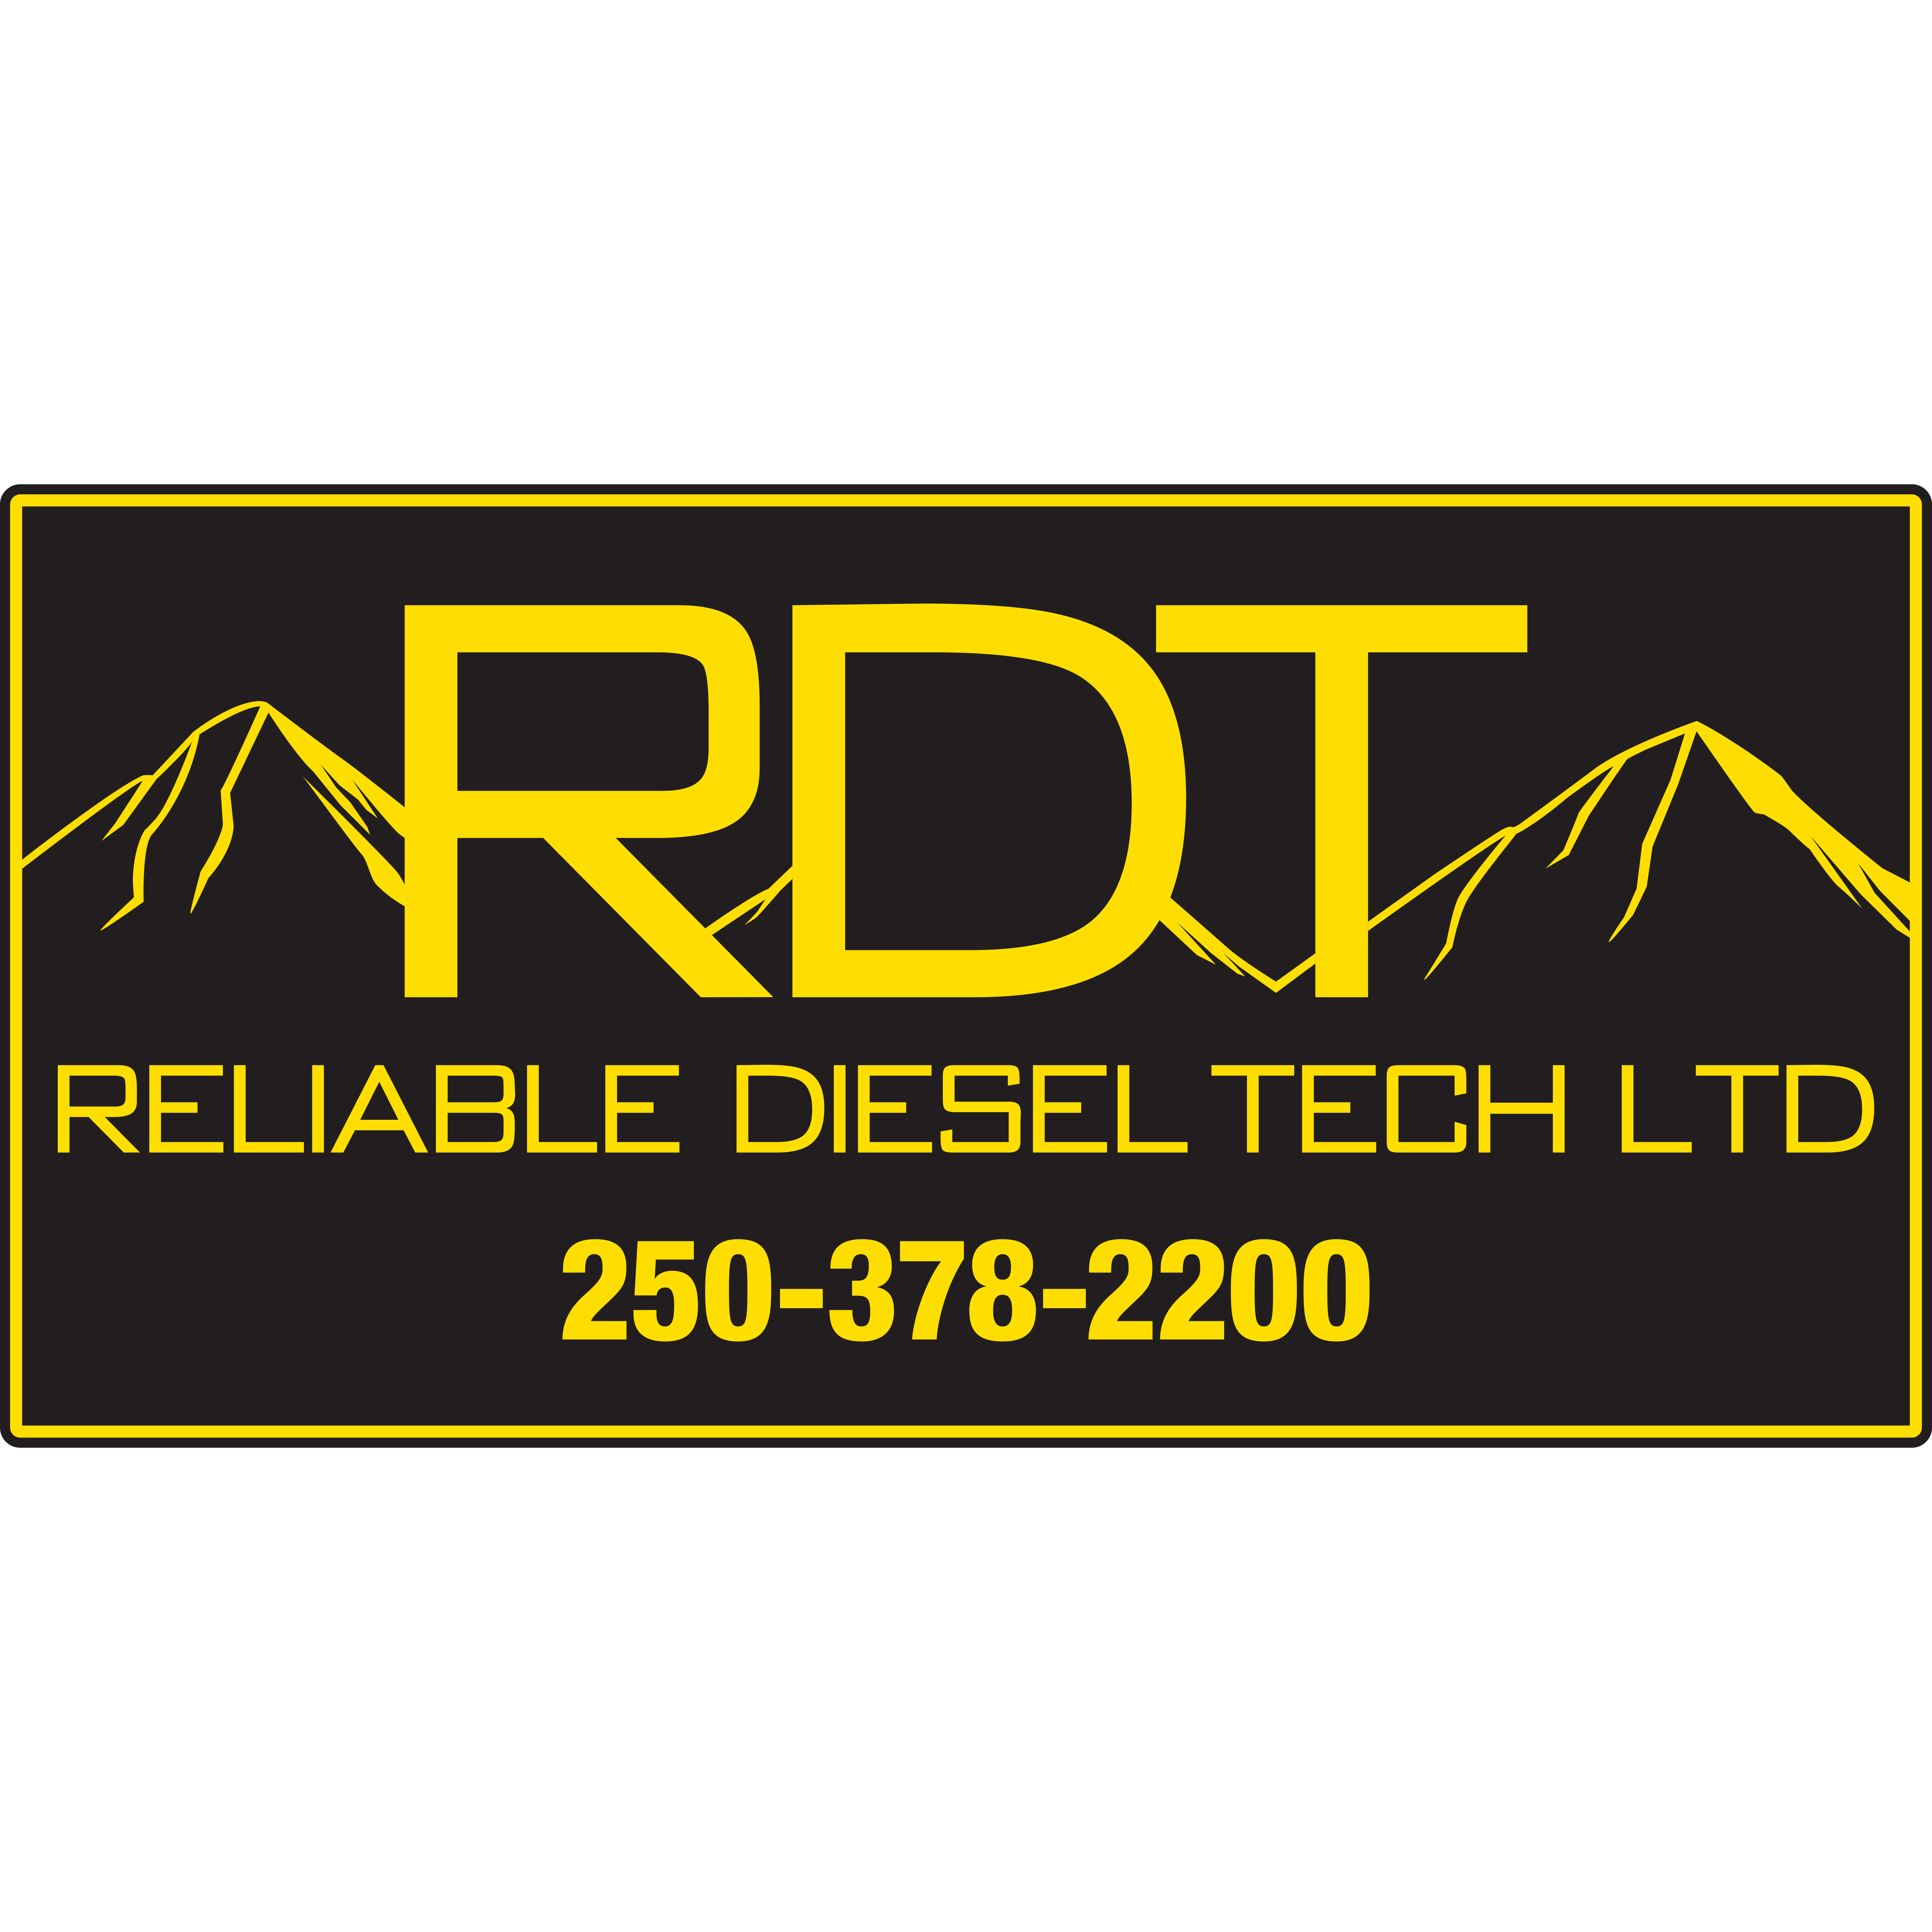 Reliable Diesel Tech